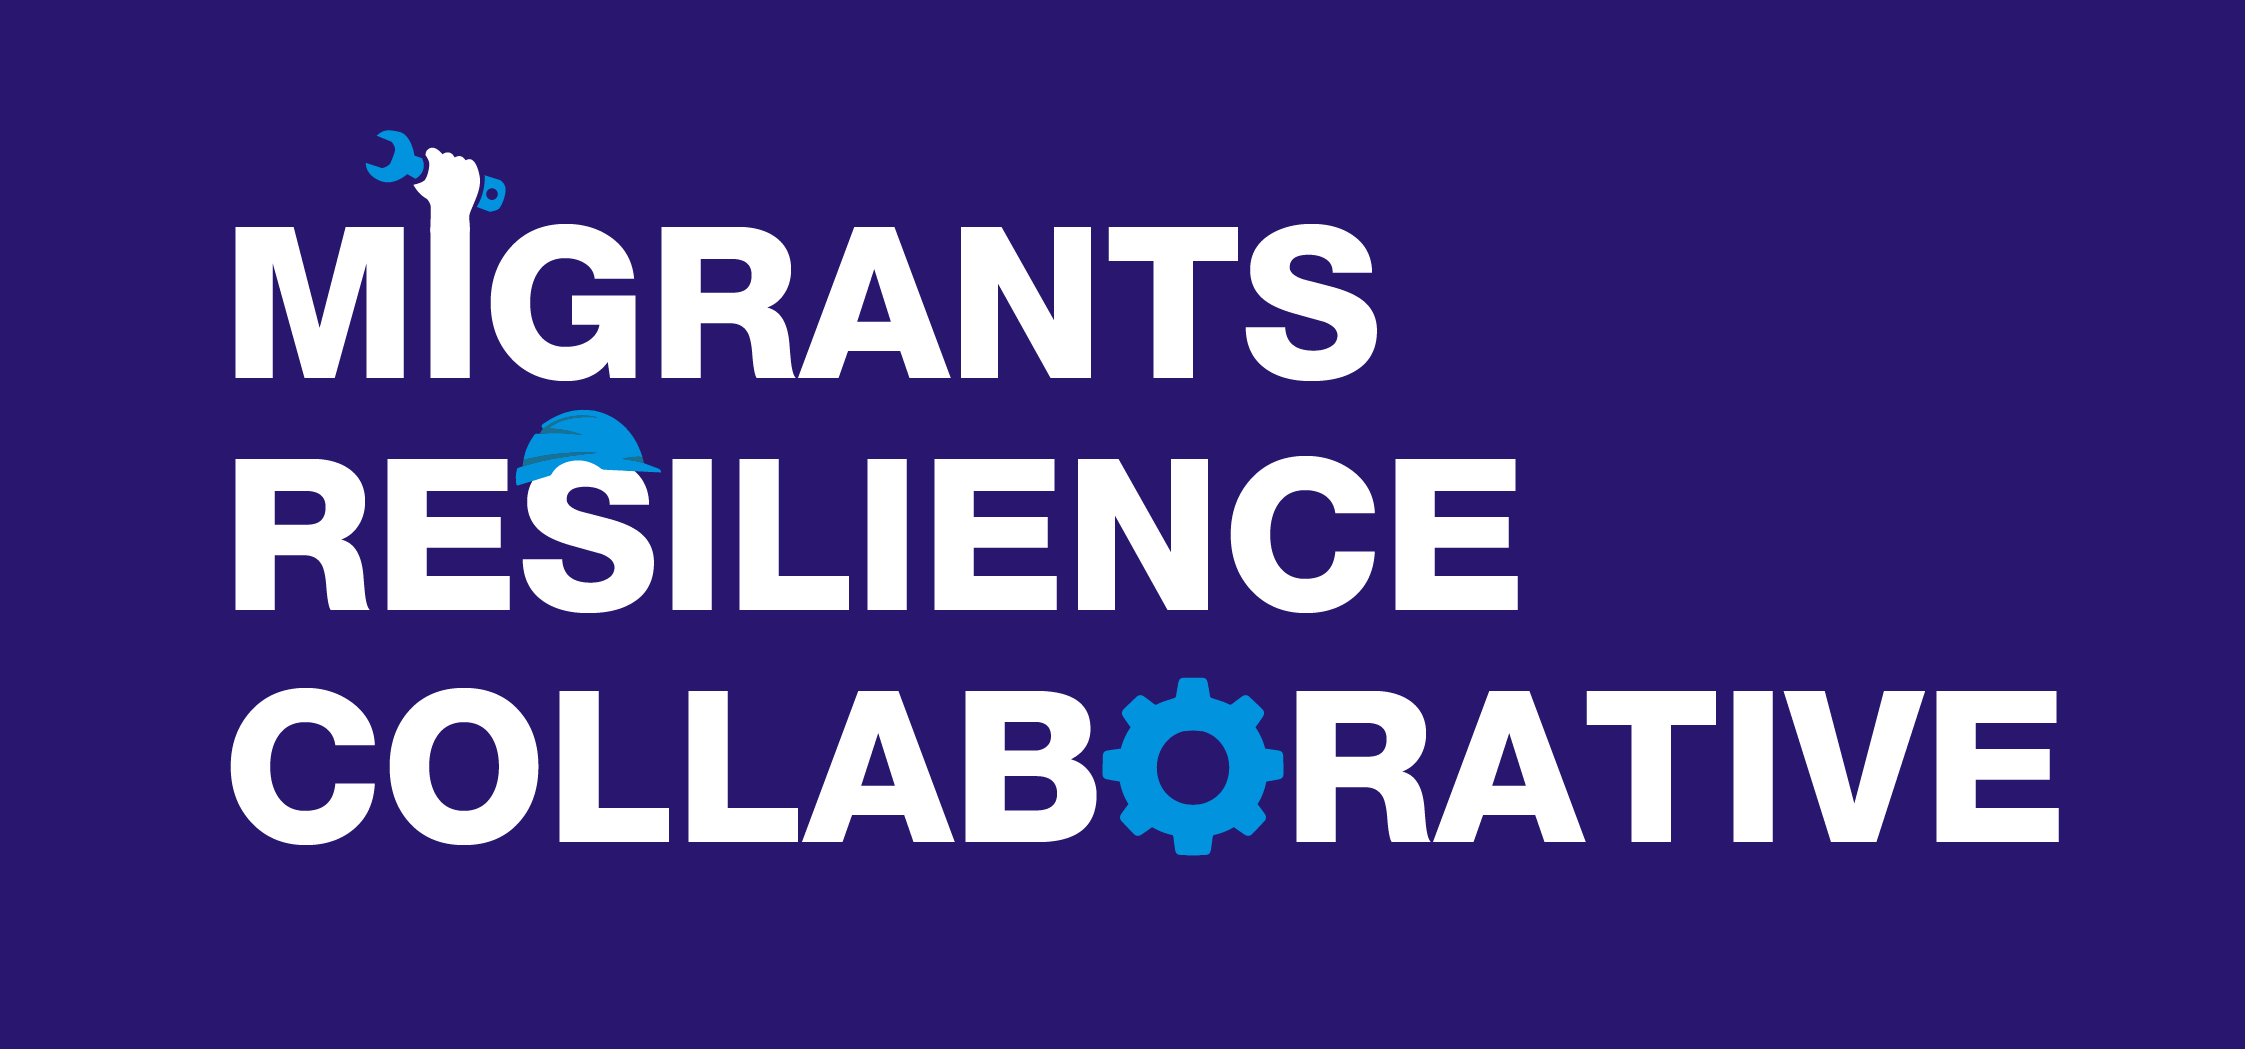 Migrants Resilience Collaborative (MRC)